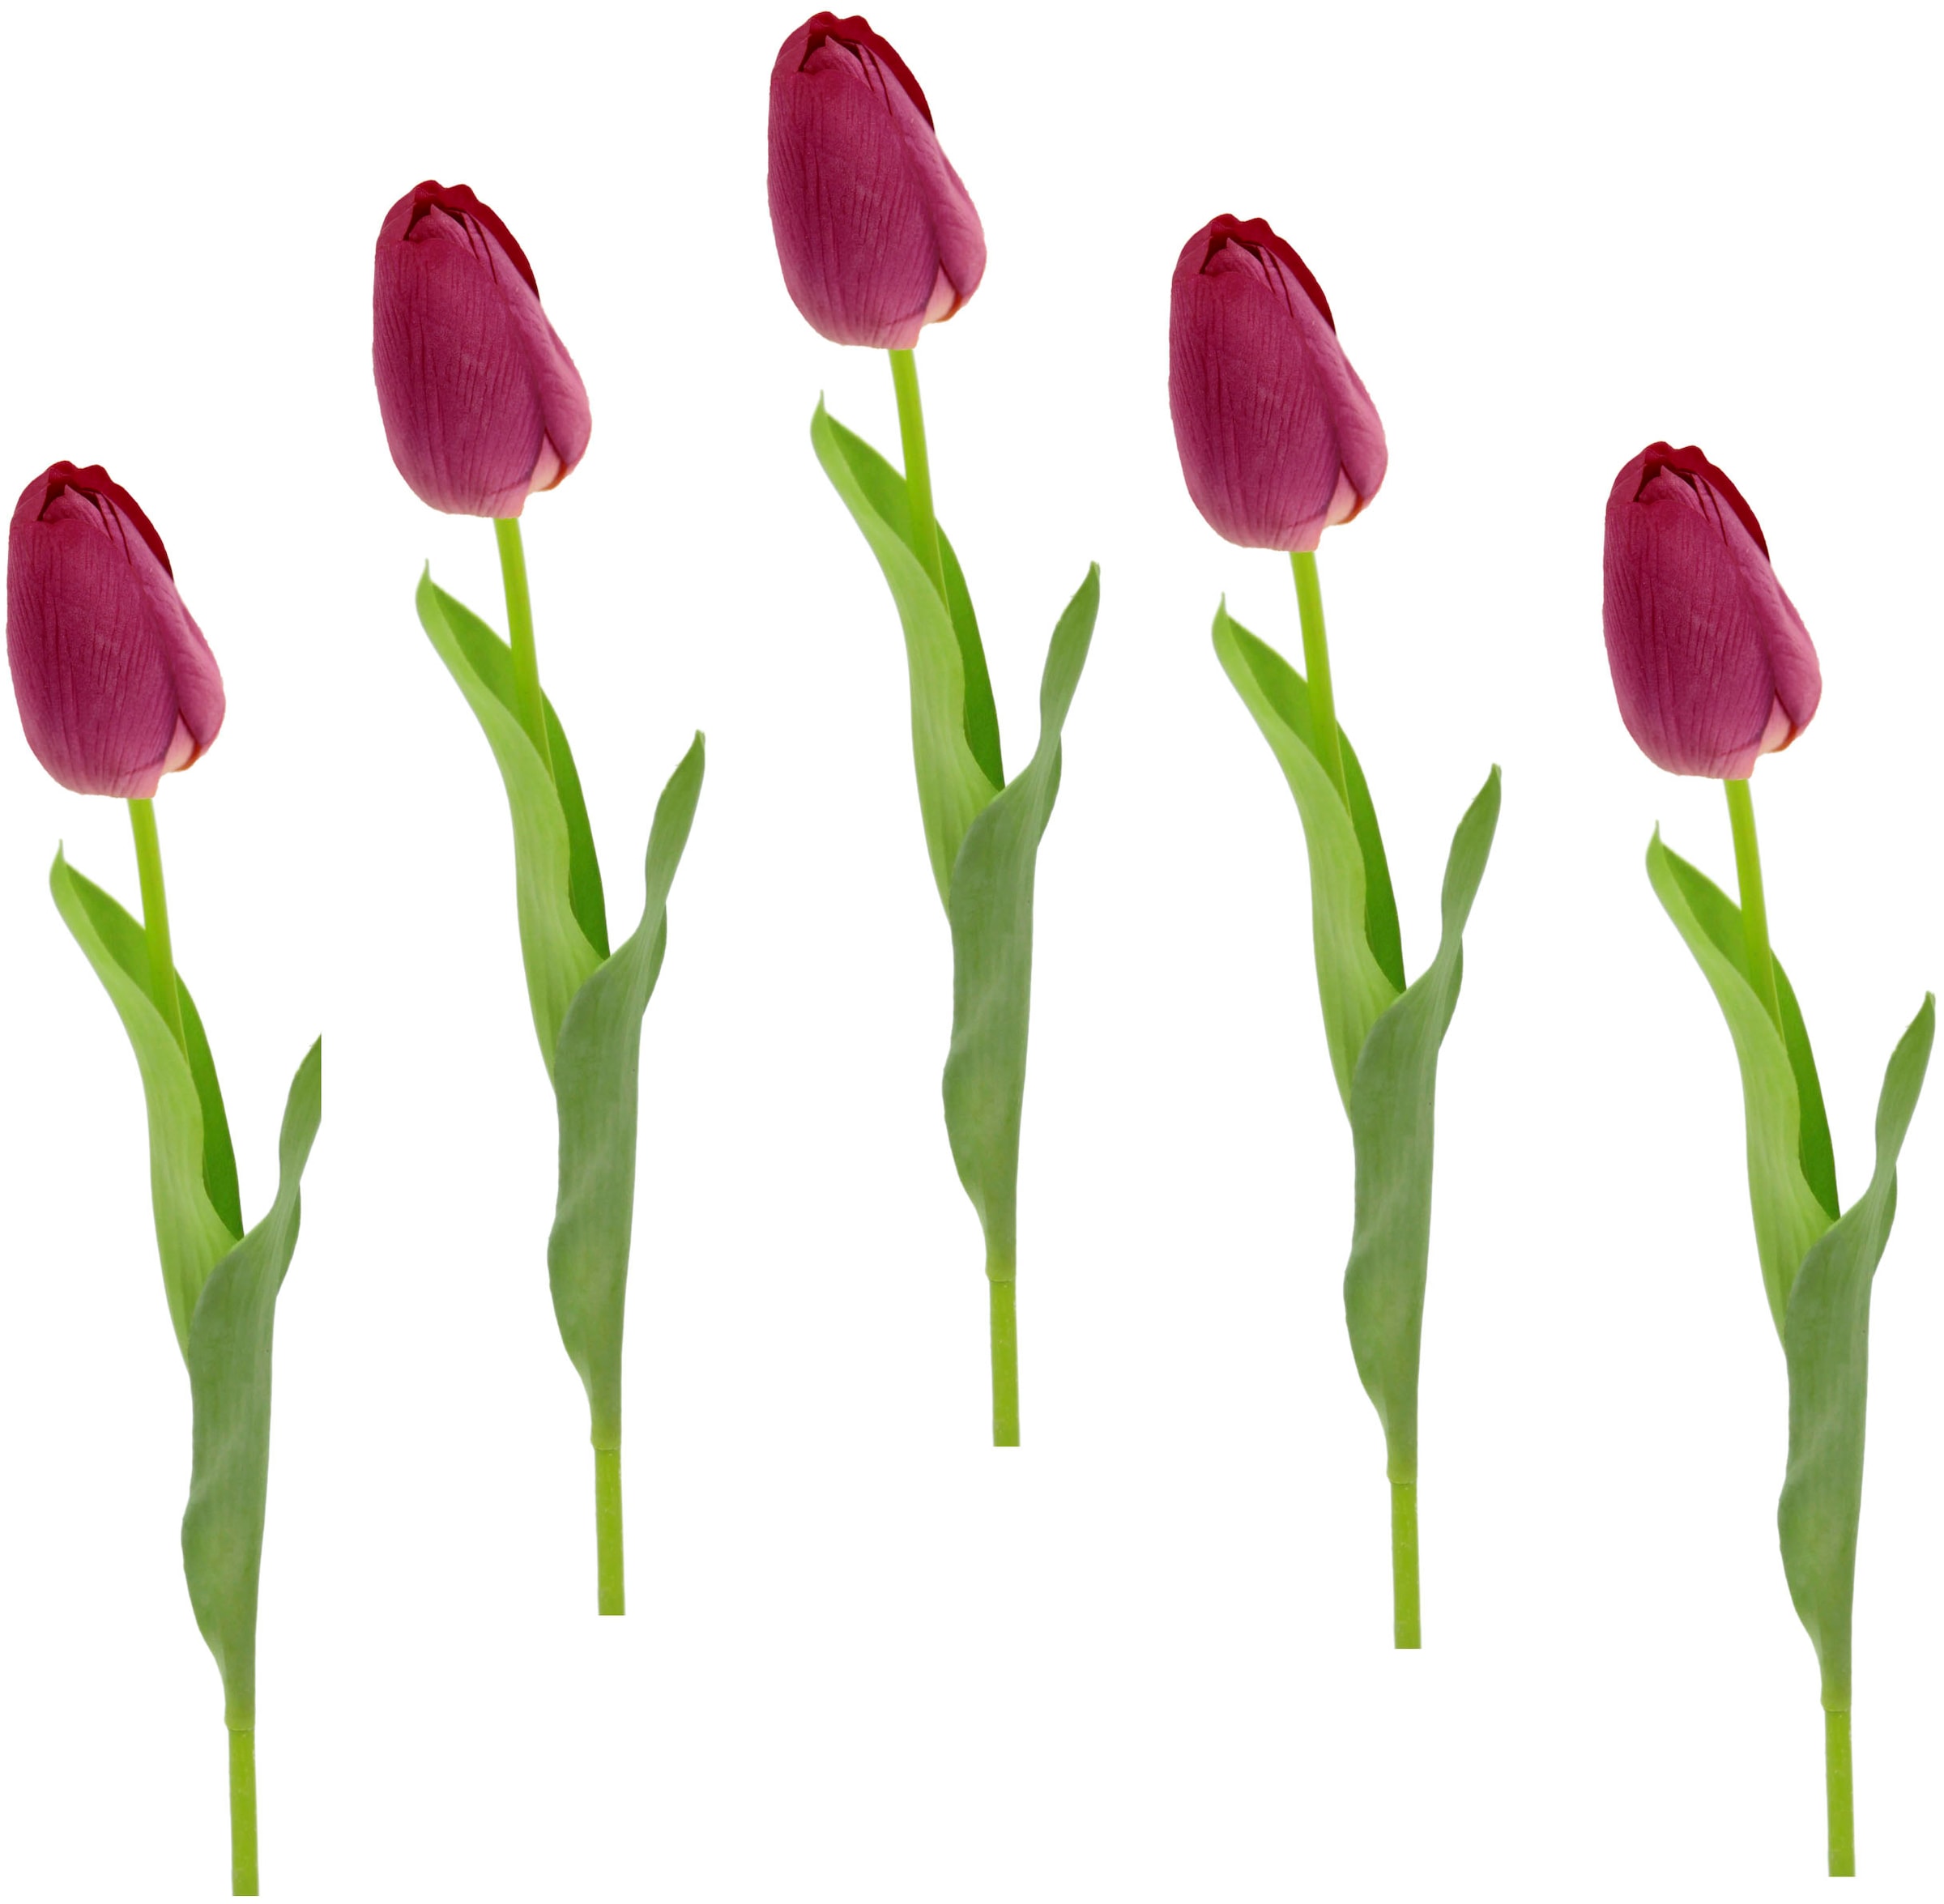 jetzt künstliche kaufen »Real Kunstblume Touch Stielblume Tulpenknospen, Set Kunstblumen, I.GE.A. Tulpen«, 5er